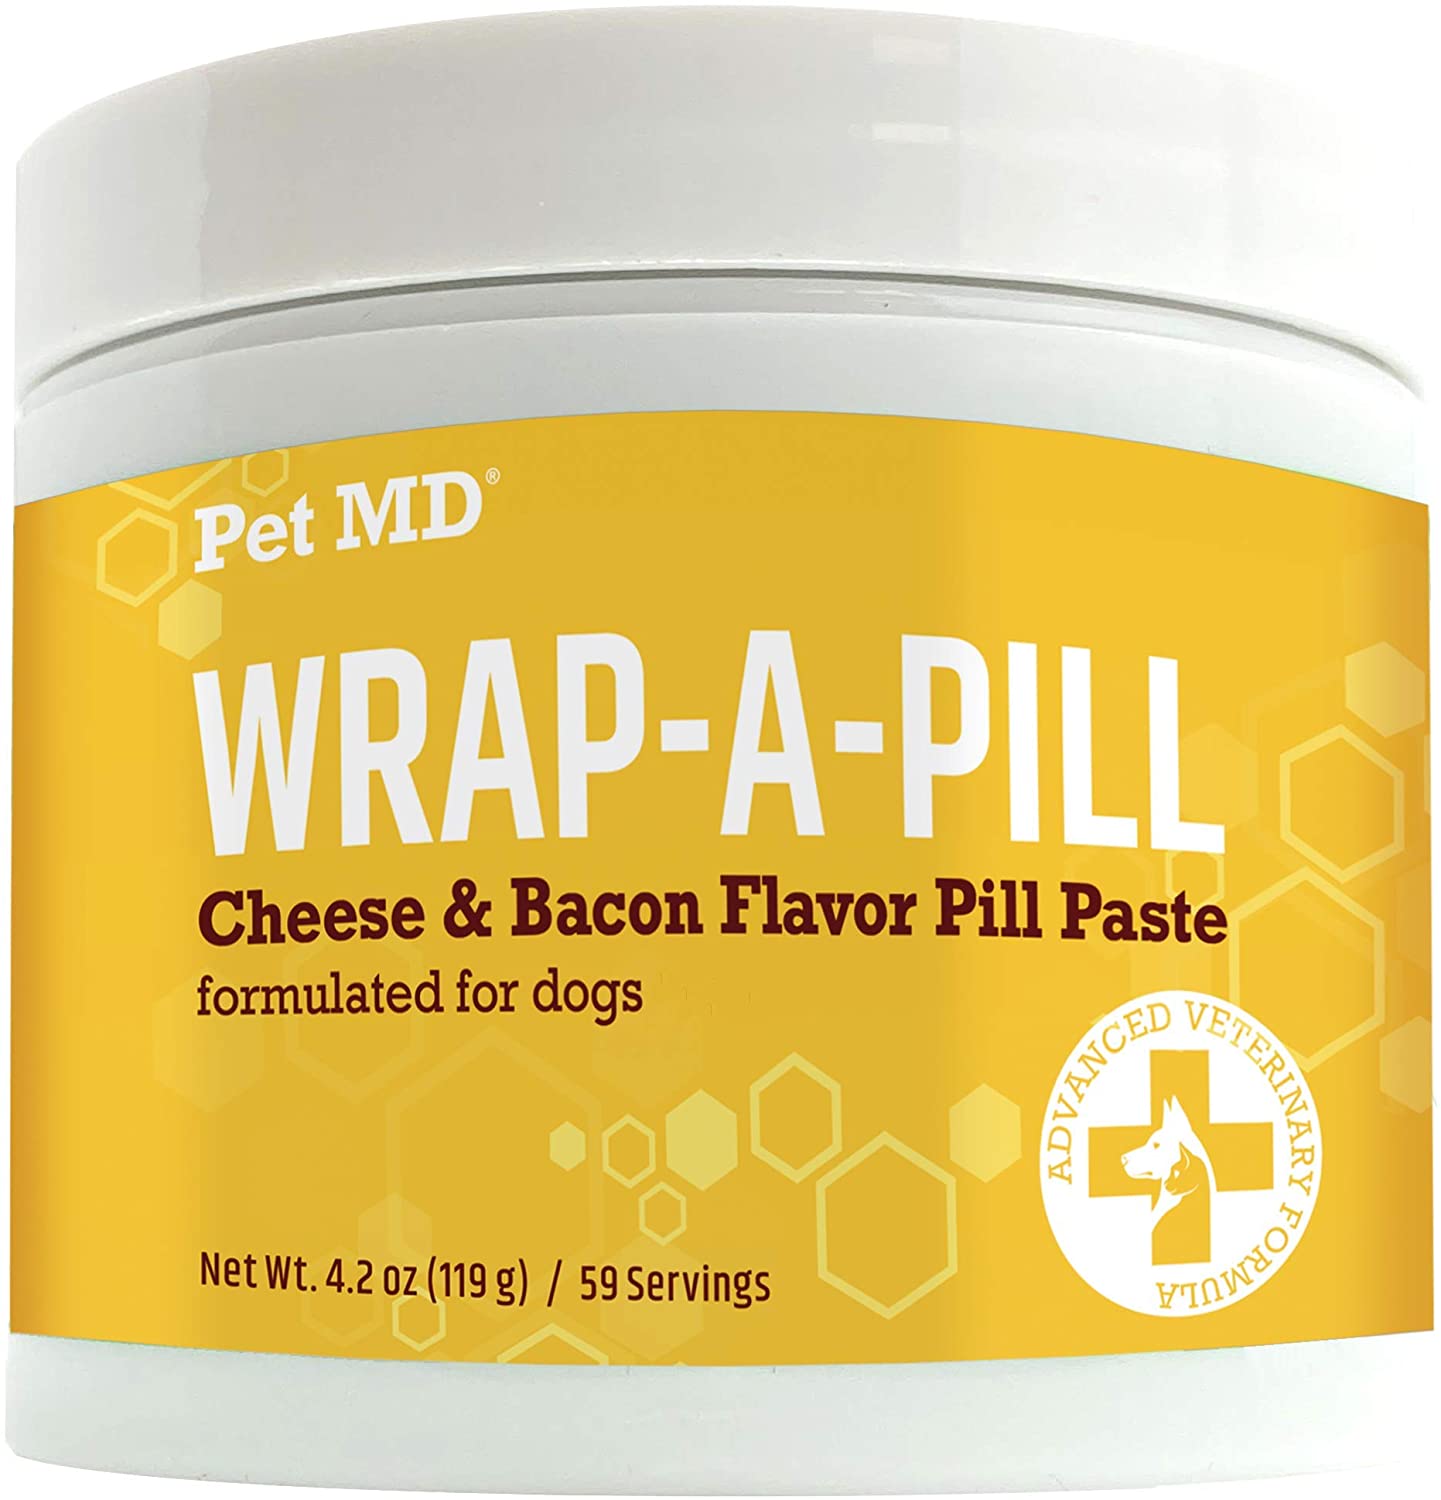 Pet MD Wrap A Pill Cheese & Bacon Flavor Pill Paste